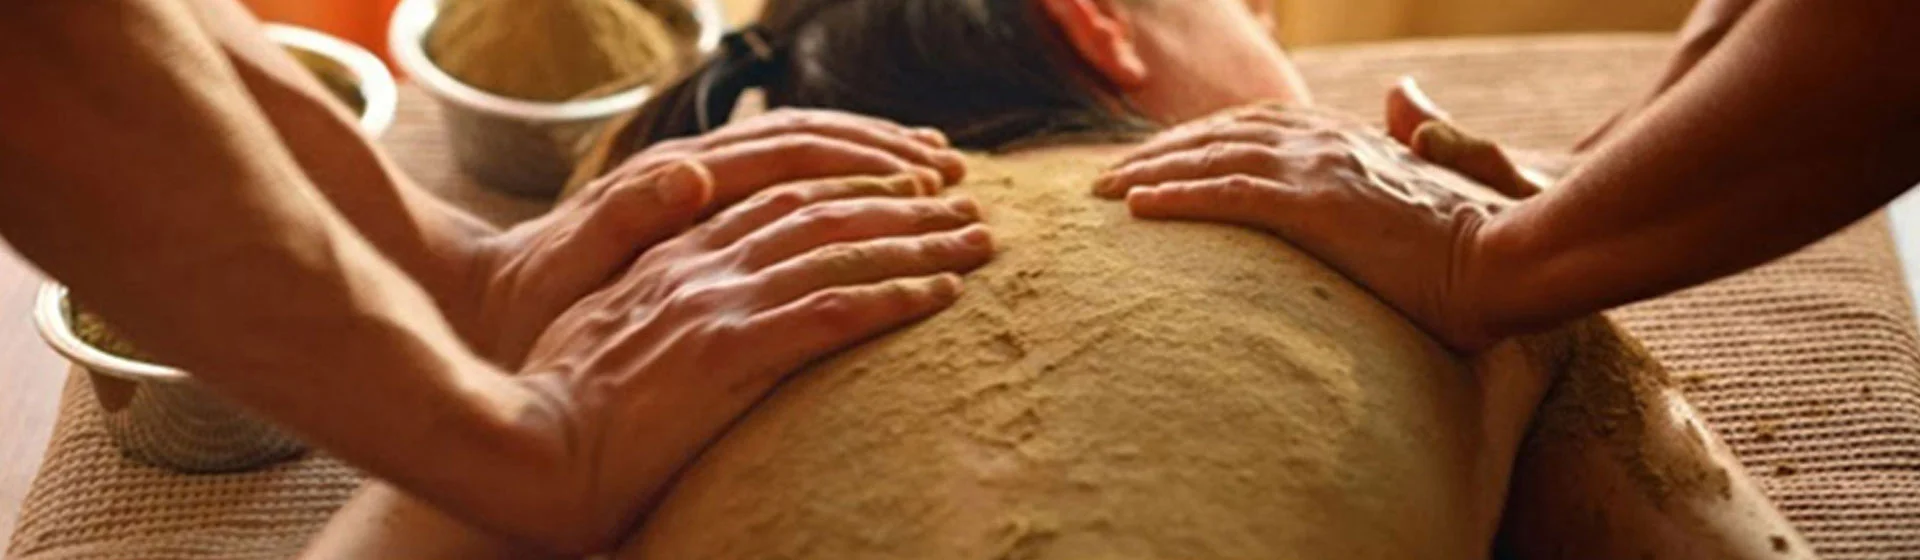 best ayurvedic massage in dubai